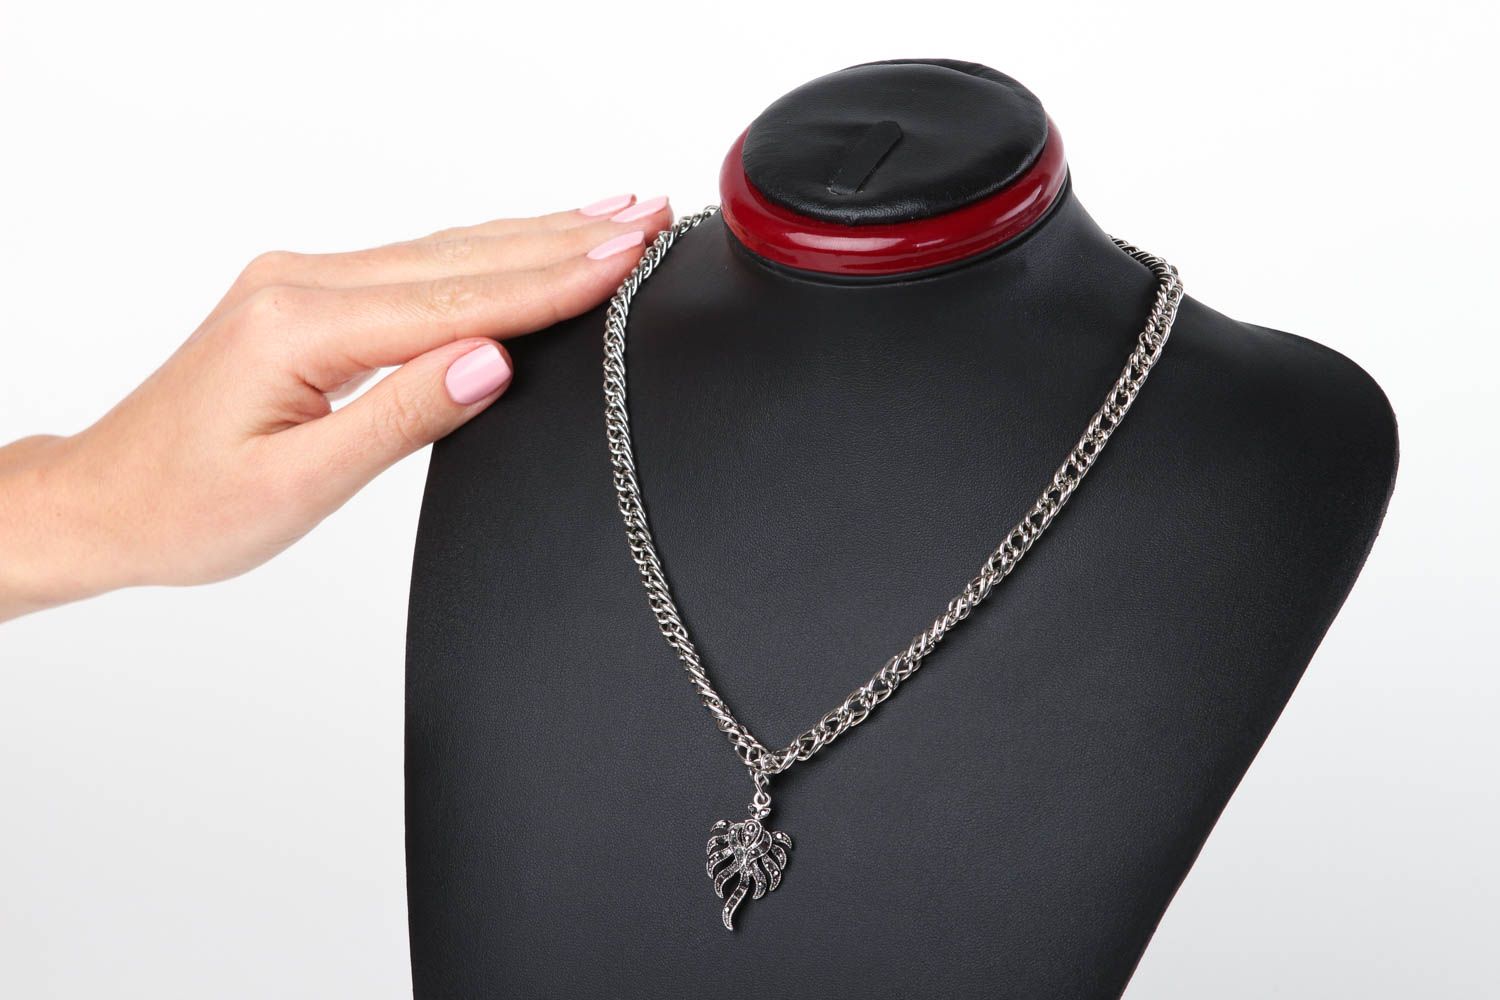 Unusual handmade metal pendant metal necklace designs accessories for girls photo 5